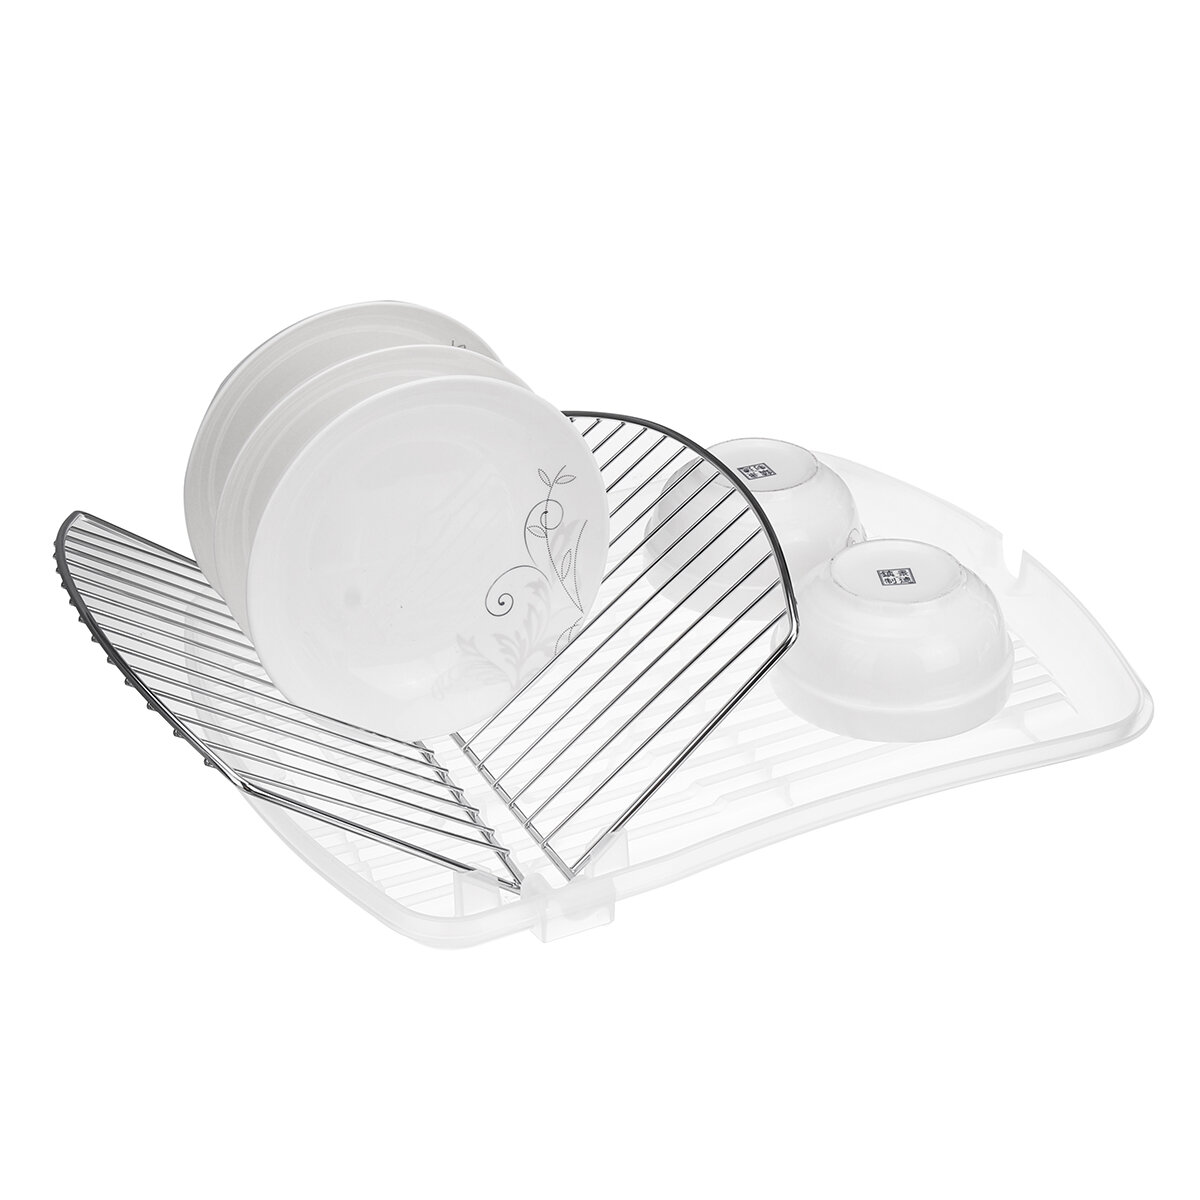 Dish Drain Rack Kitchen Bowls Cups Storage Shelves Foldable Tray Dish Organizer Kitchenware Holder